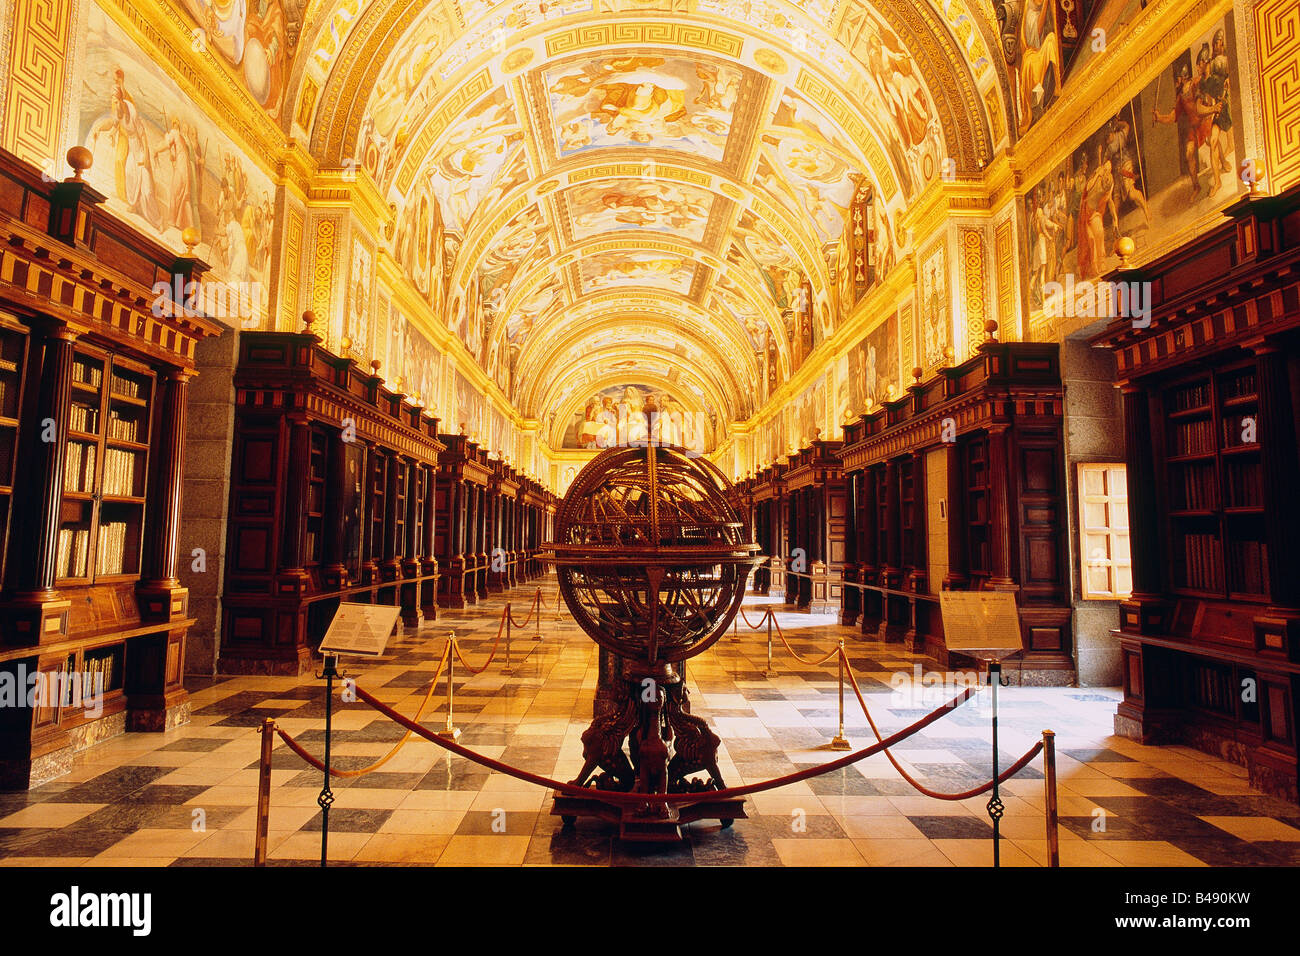 Spagna - Madrid - El Escorial - Il Monastero Reale di San Lorenzo - El Biblioteca Reale - Globe Foto Stock